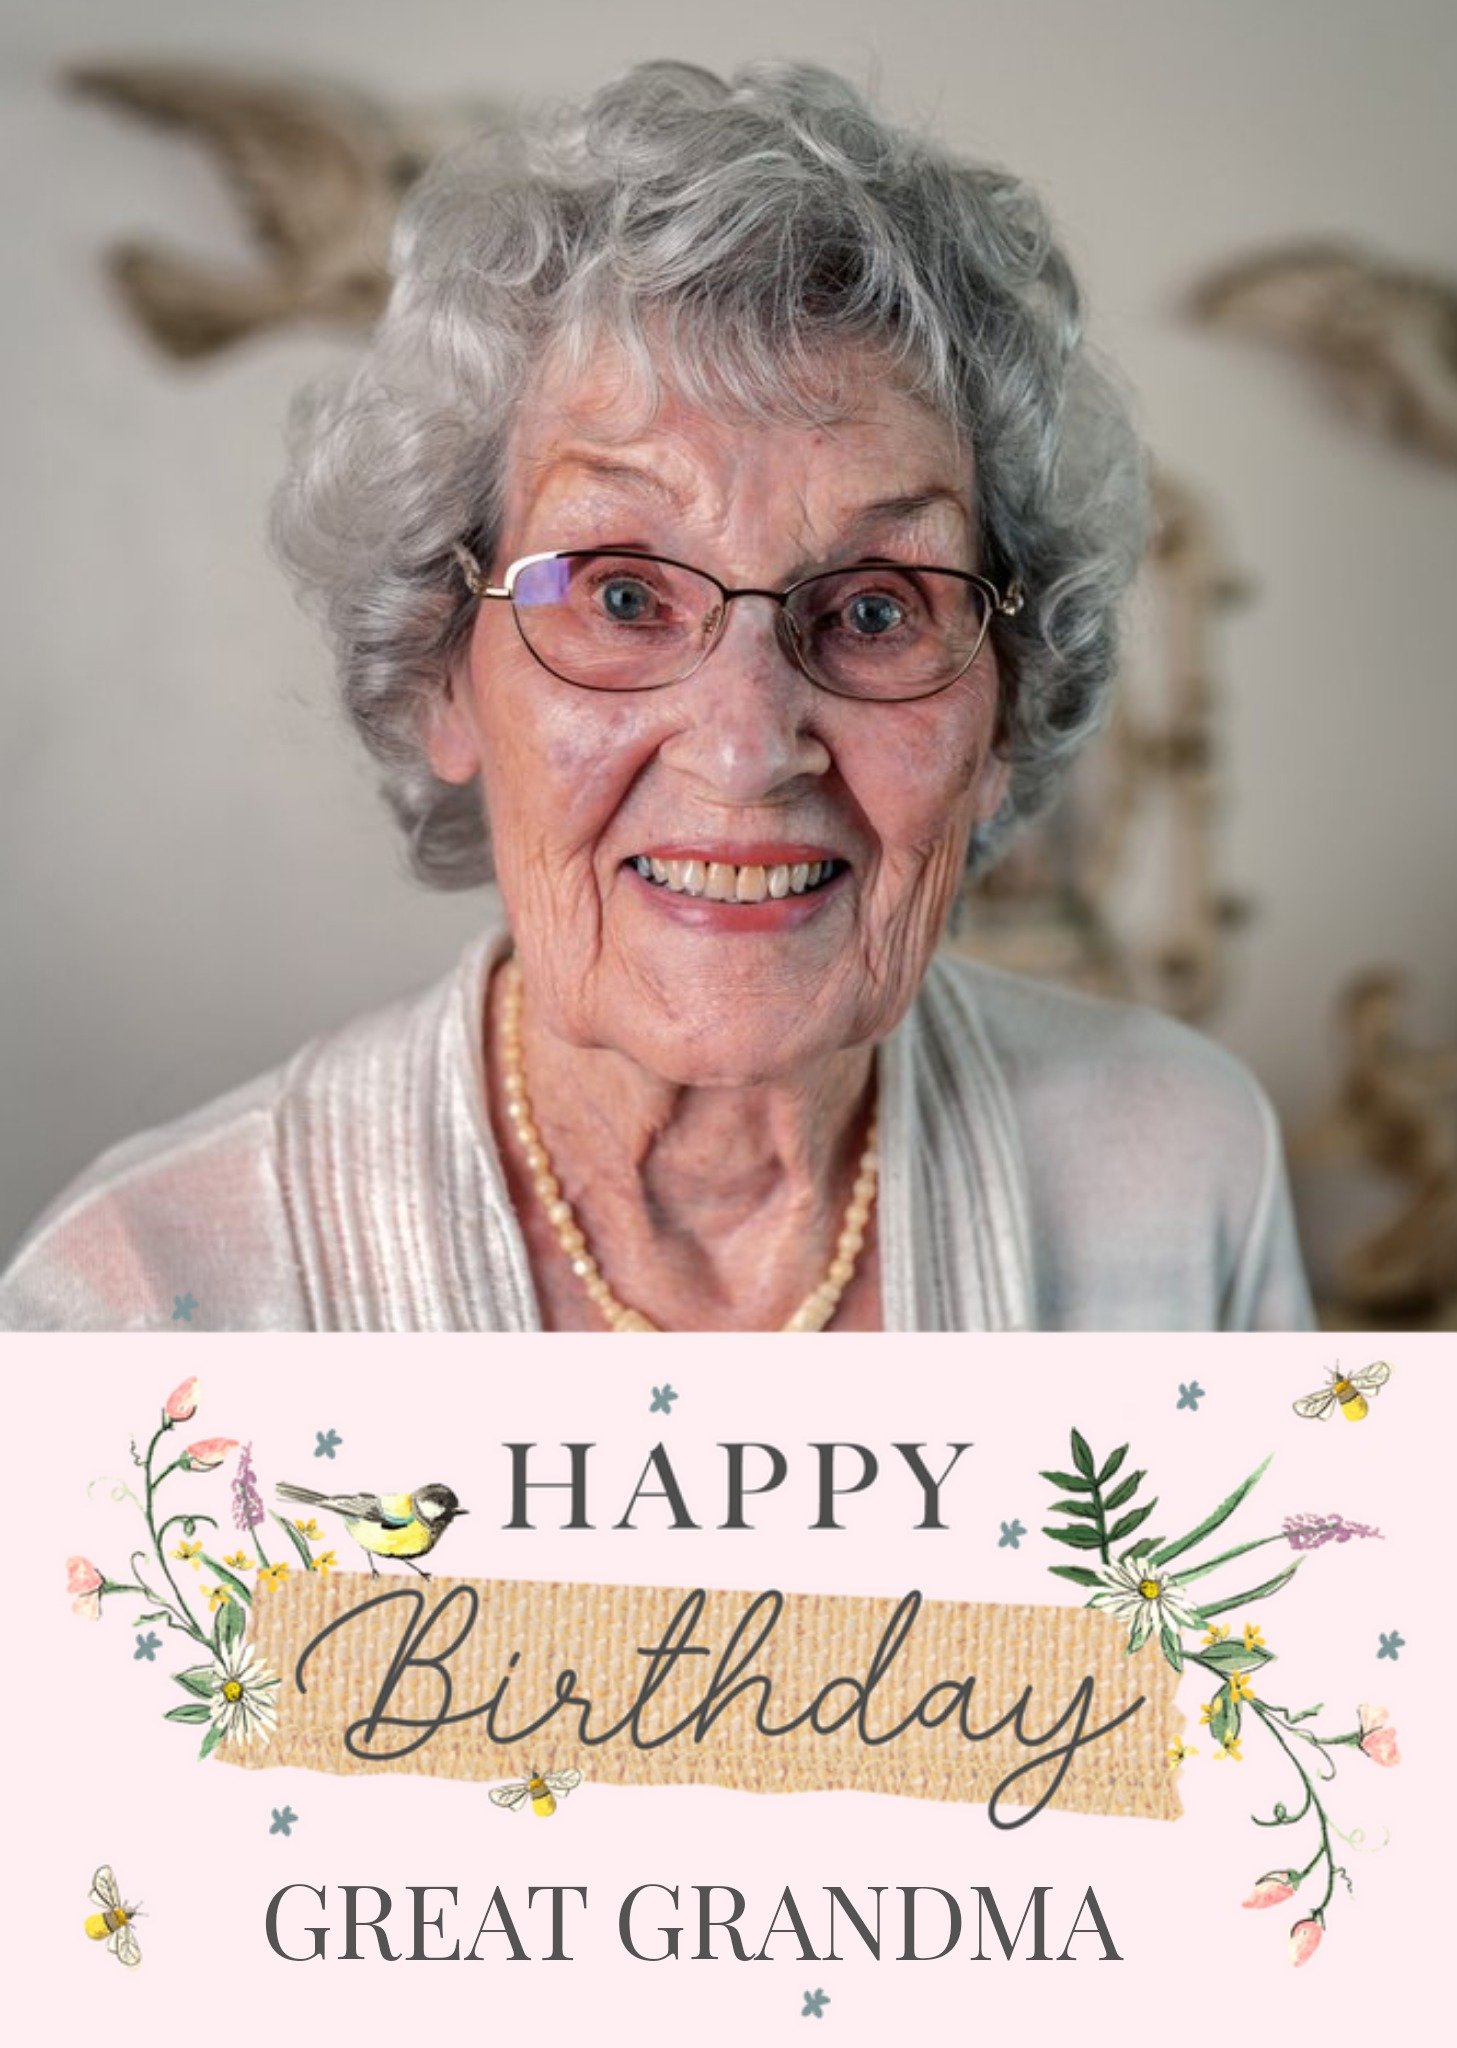 Okey Dokey Design Happy Birthday Great Grandma Photo Upload Card, Large